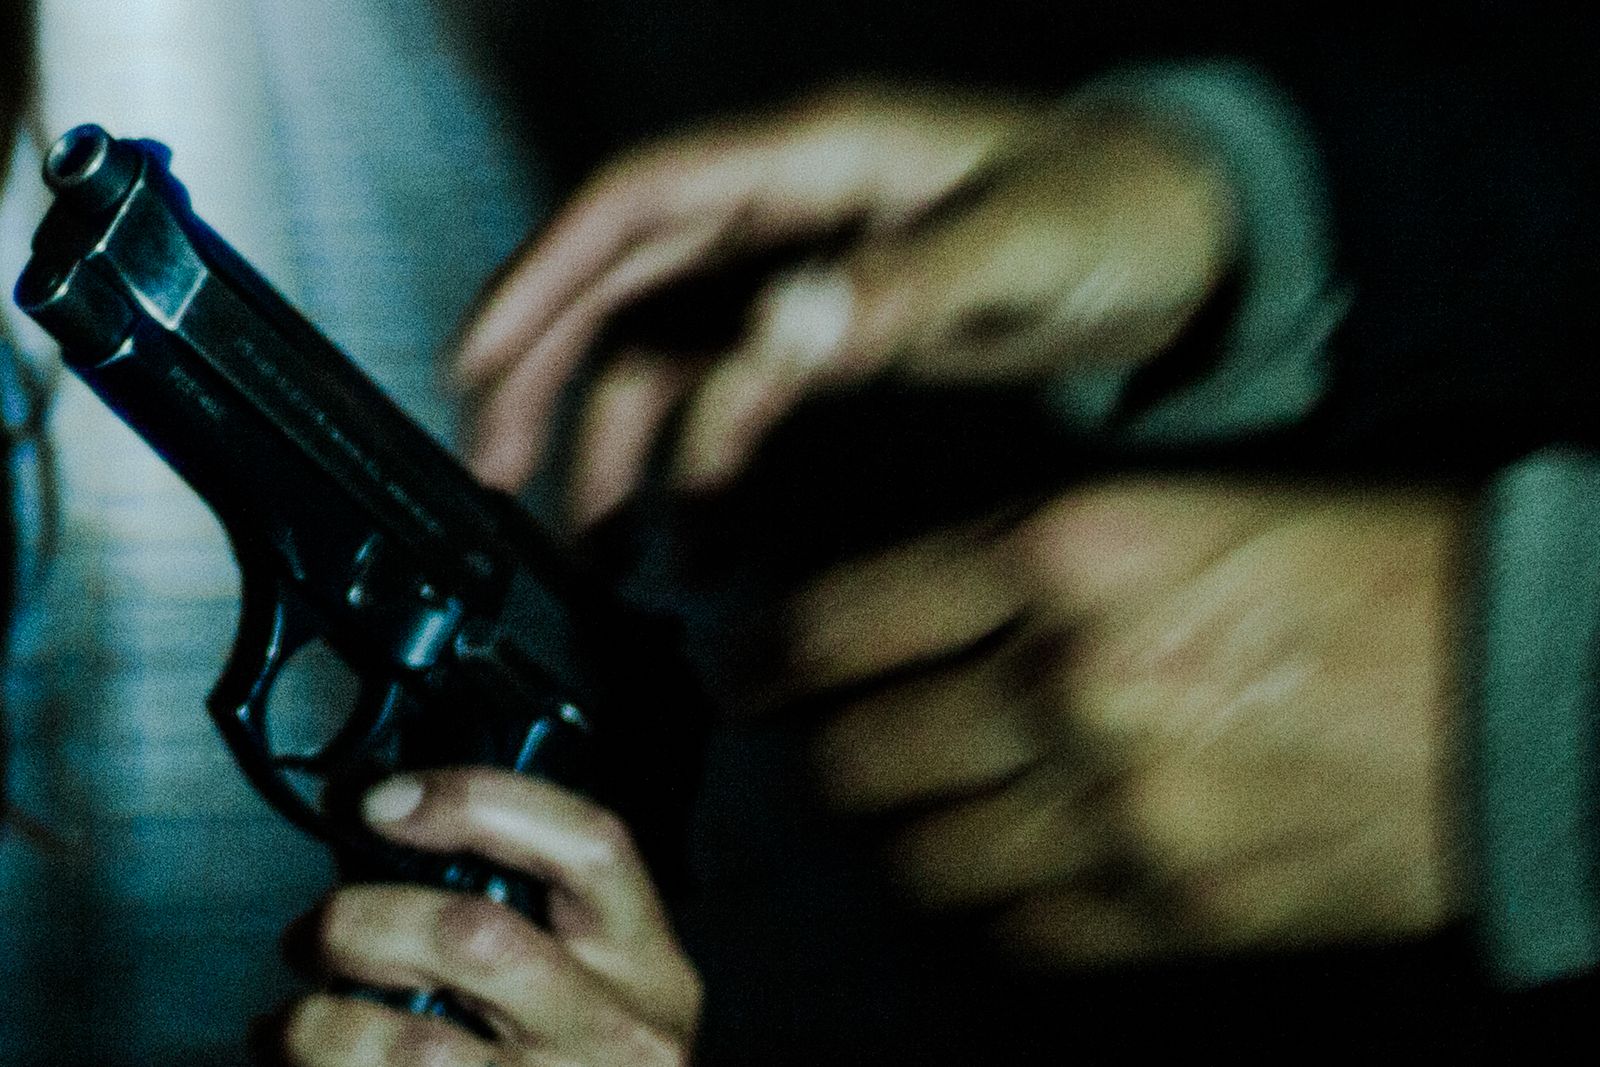 © Celine Croze - Yair and his Friend playing with their Gun. Caracas, Venezuela, 2015